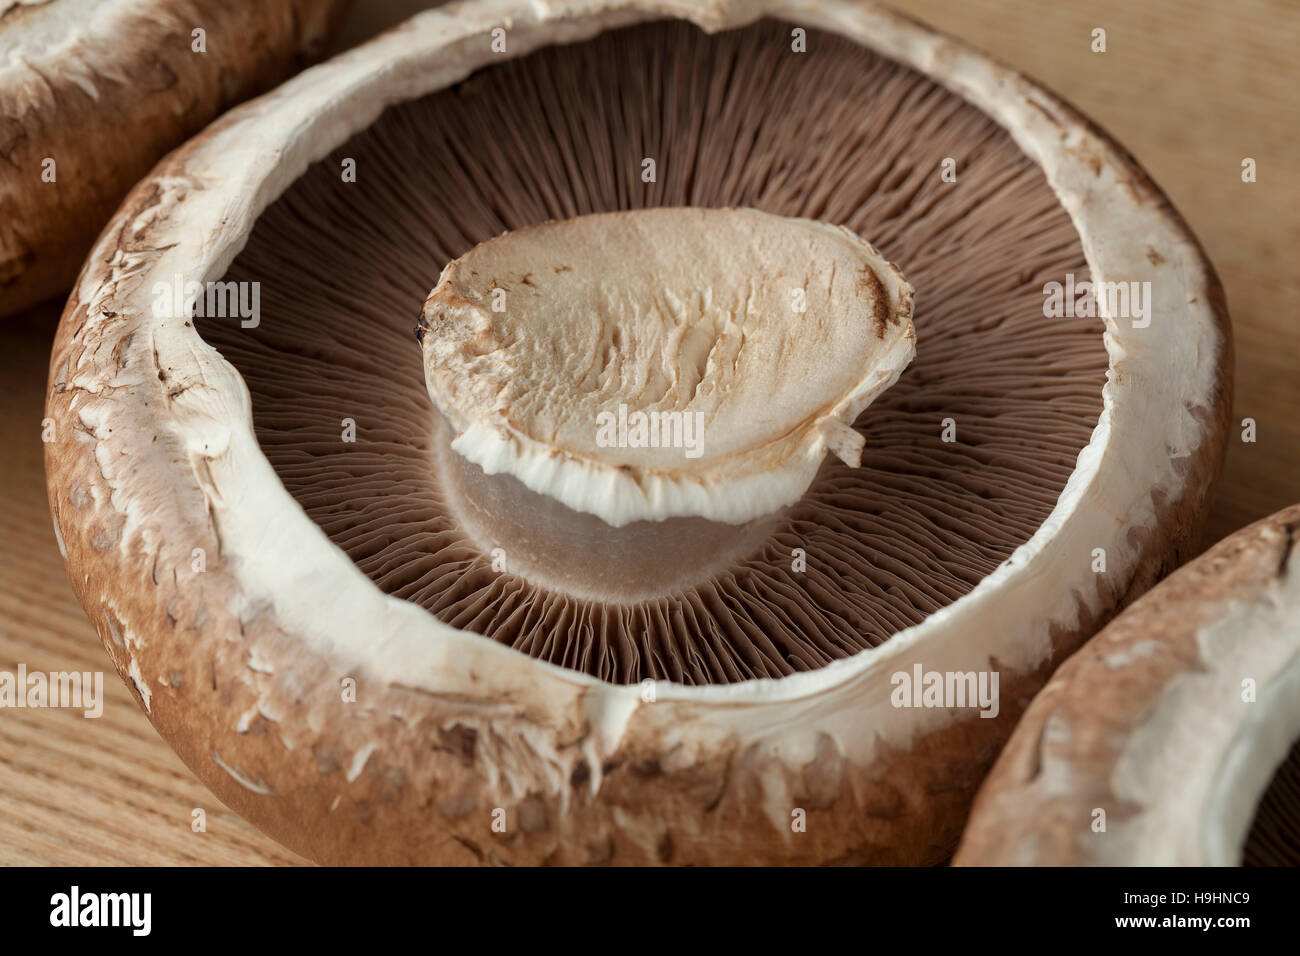 Fresche materie organiche di funghi champignon Foto Stock